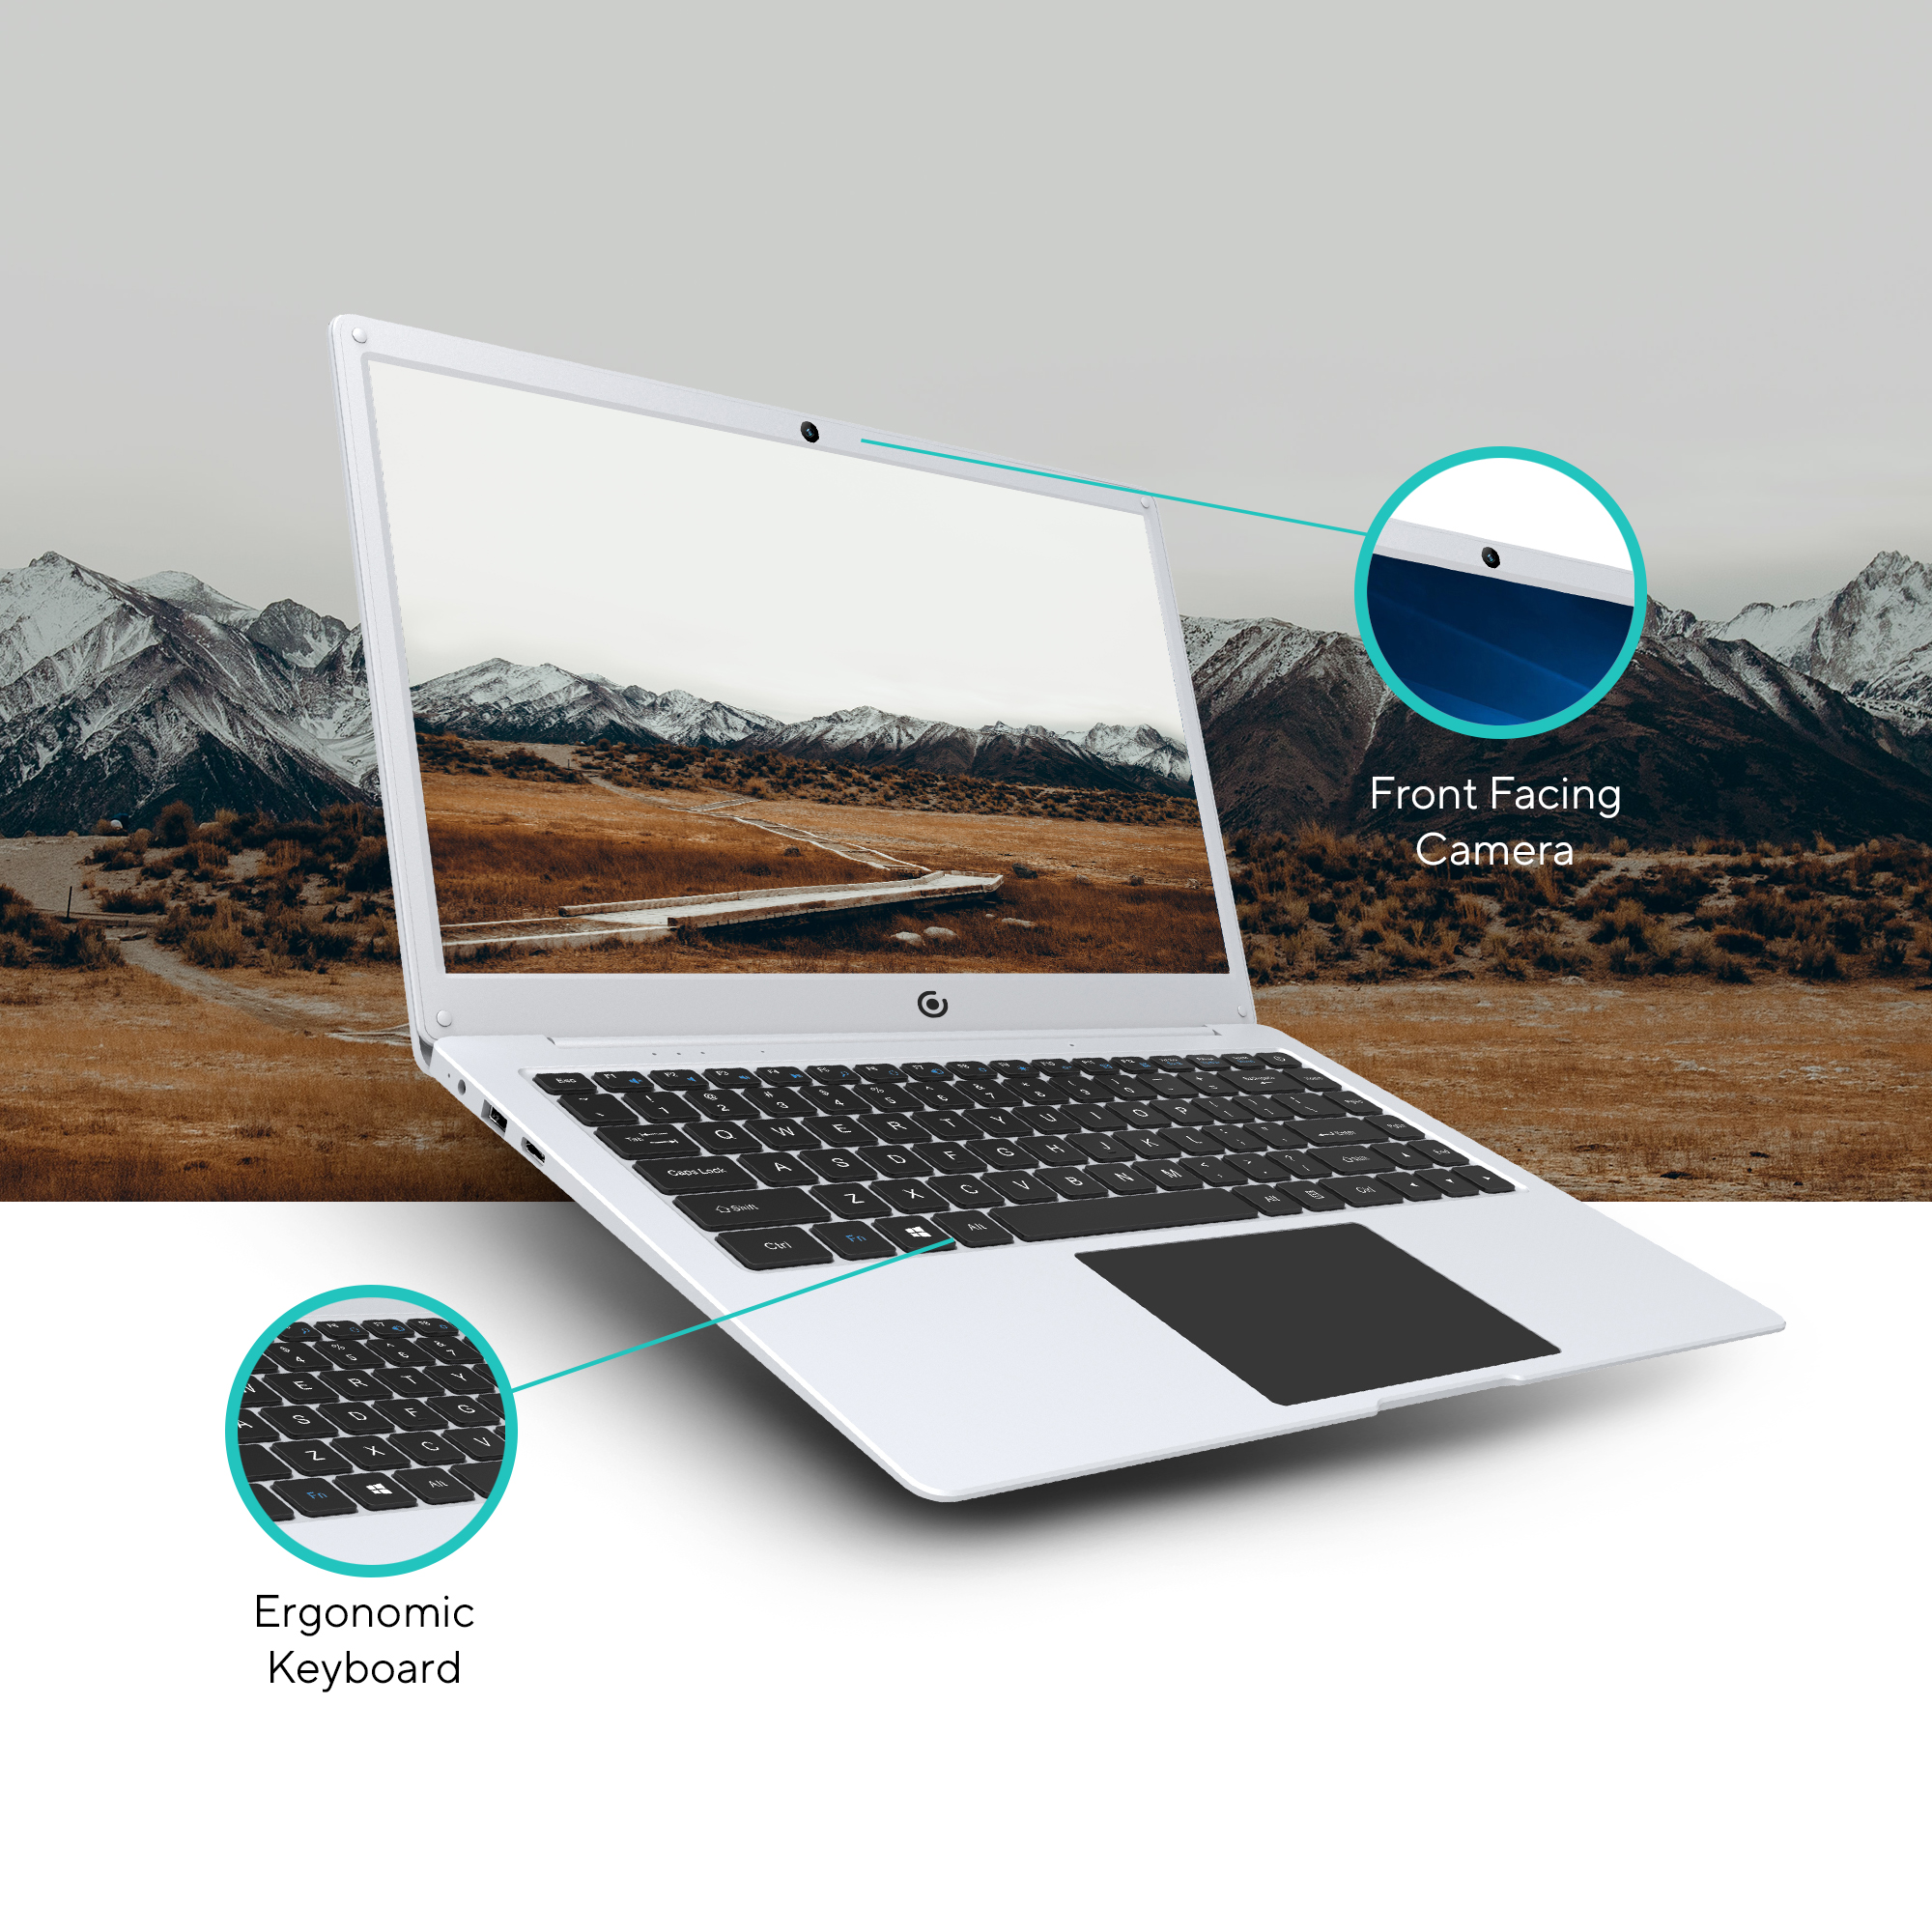 Core Innovations 14" FHD Laptop N3350 4GB 64GB eMMC Windows 10 S Silver CLT136401SL - image 4 of 8